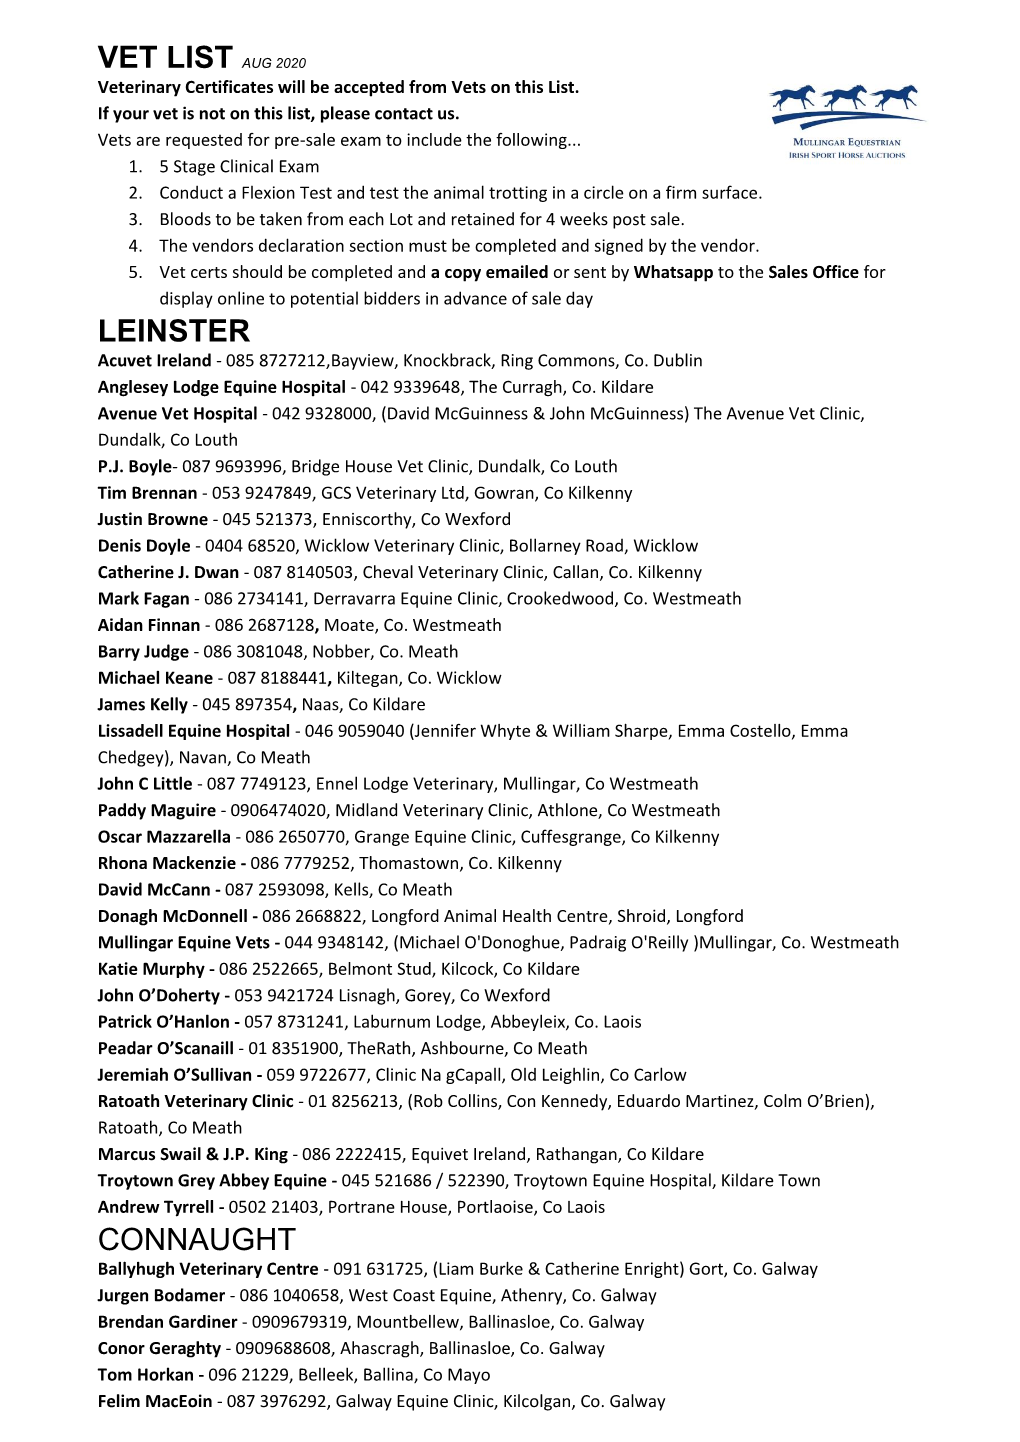 Vet List Aug 2020 Leinster Connaught